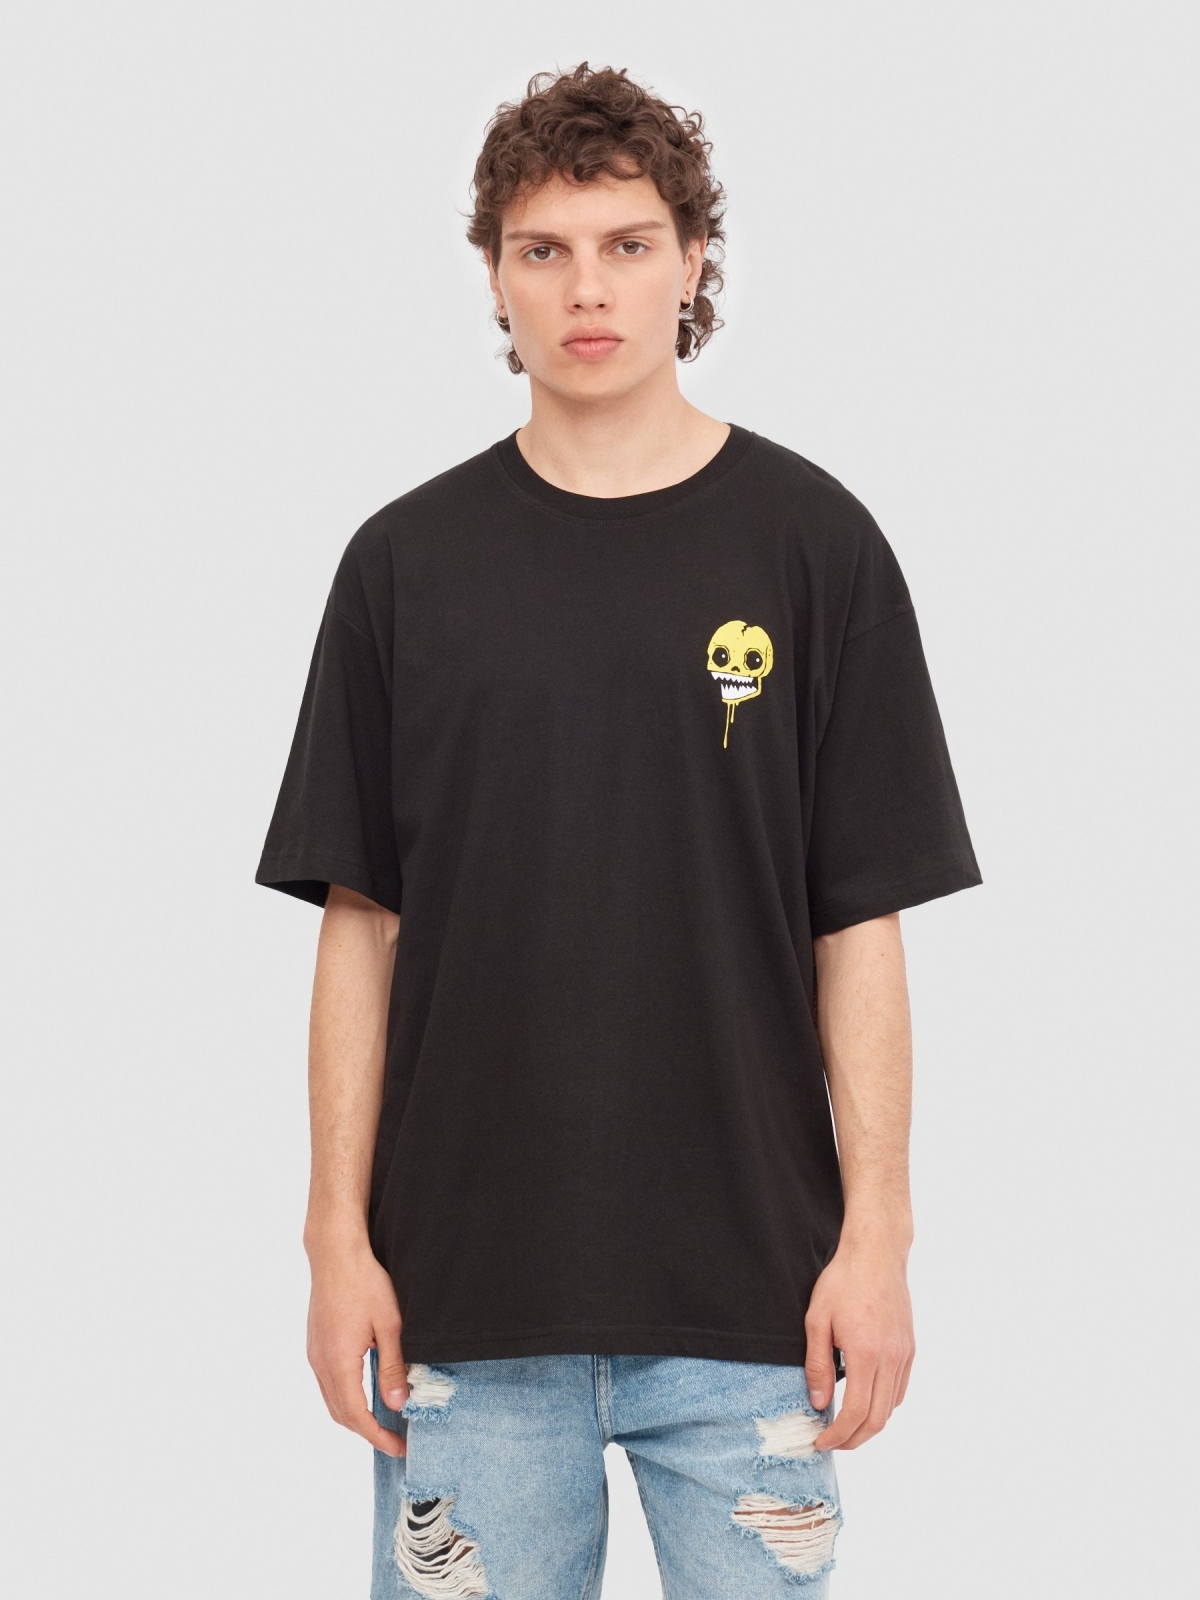 T-shirt oversize graffiti de caveira preto vista meia frontal